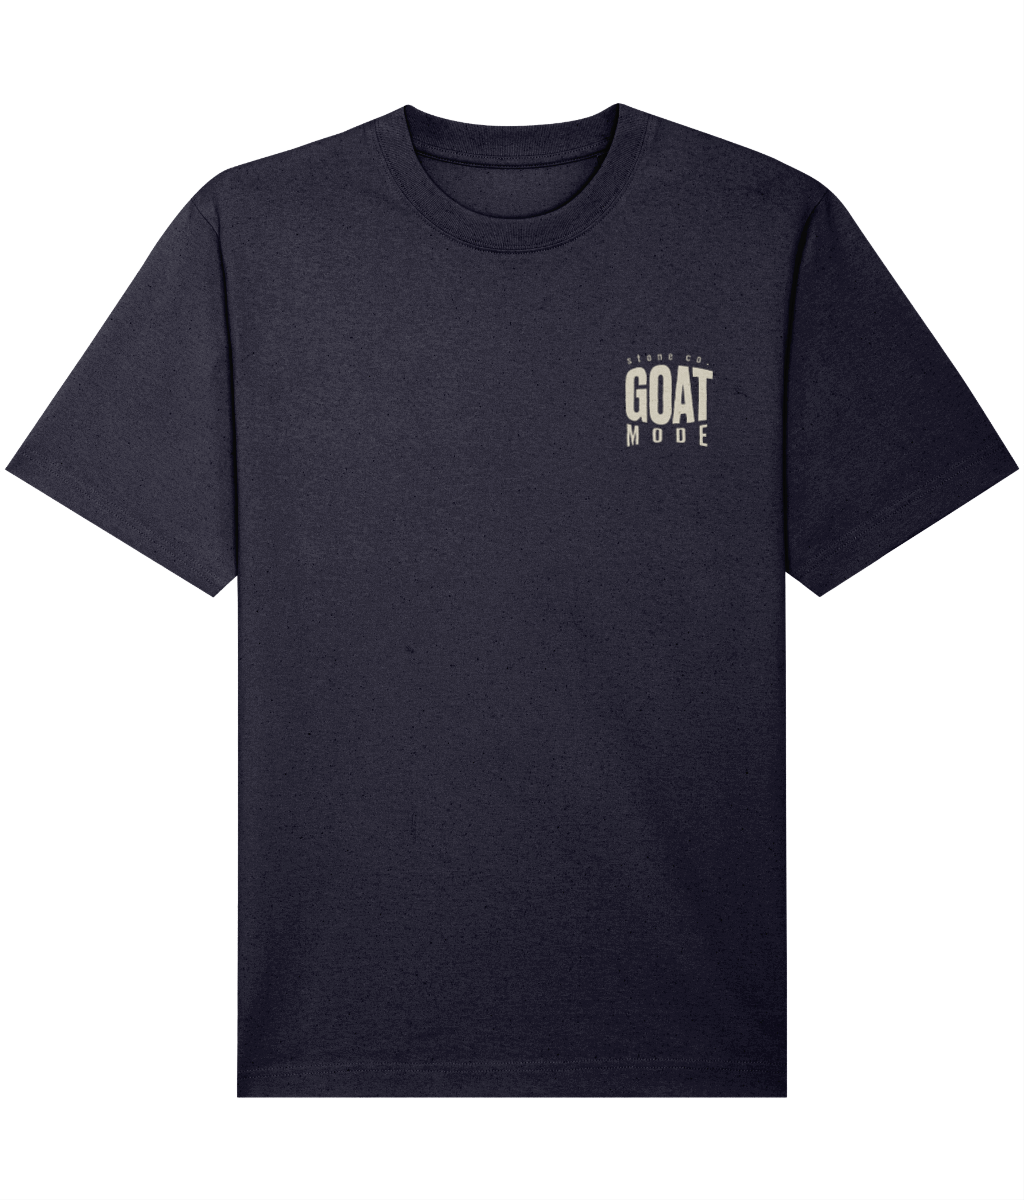 Goat mode oversized t-shirt